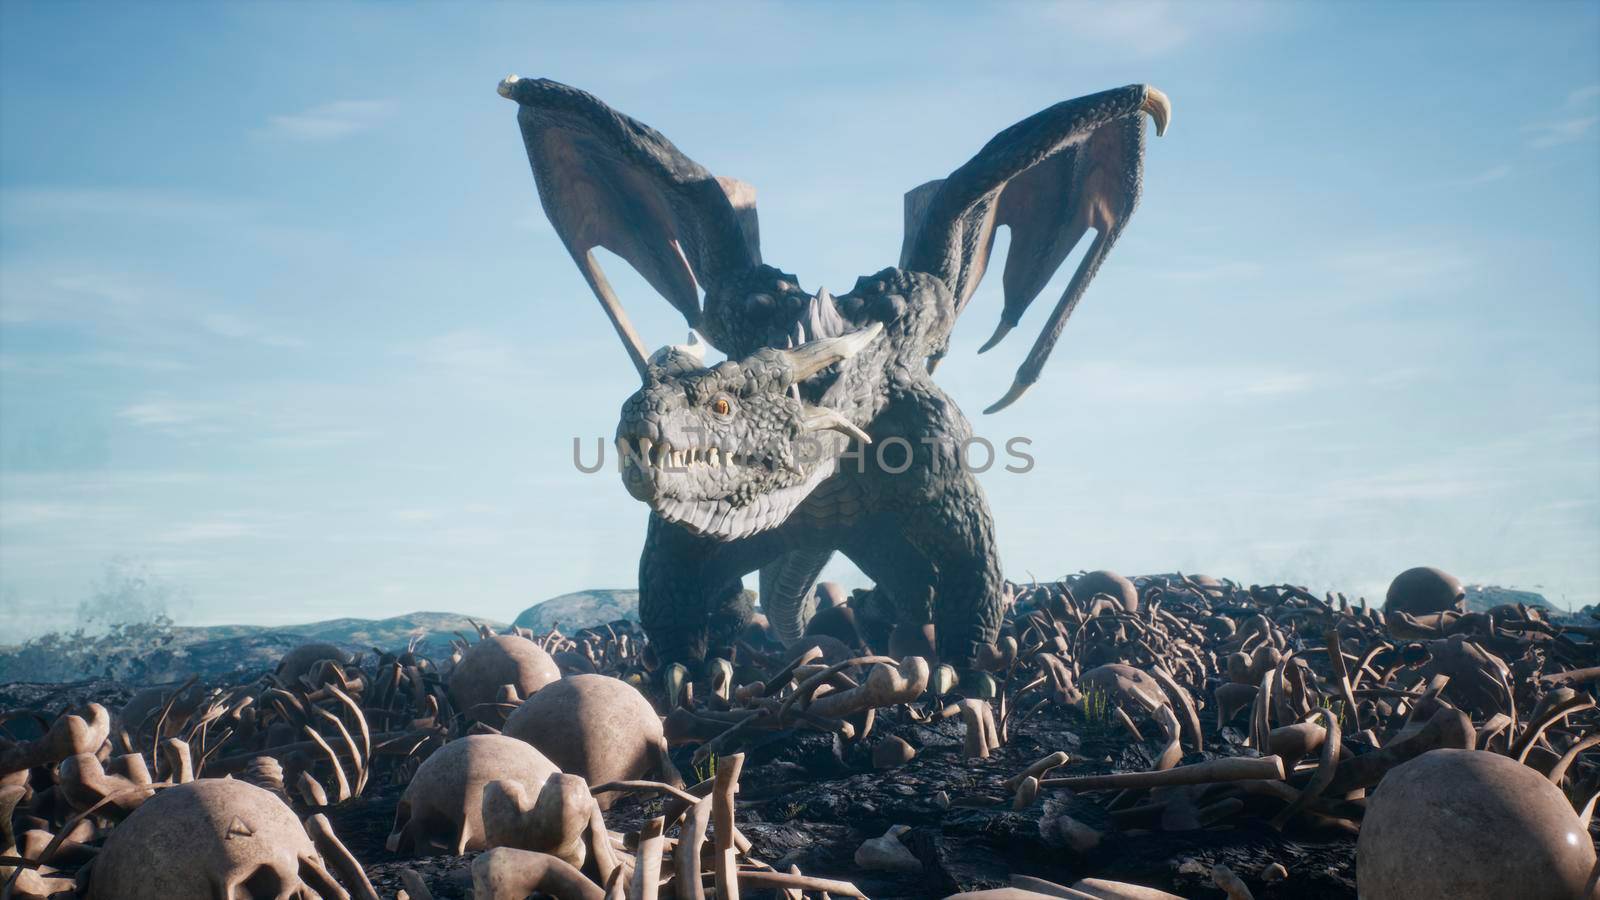 Realistic big dragon lands on scattered human bones.